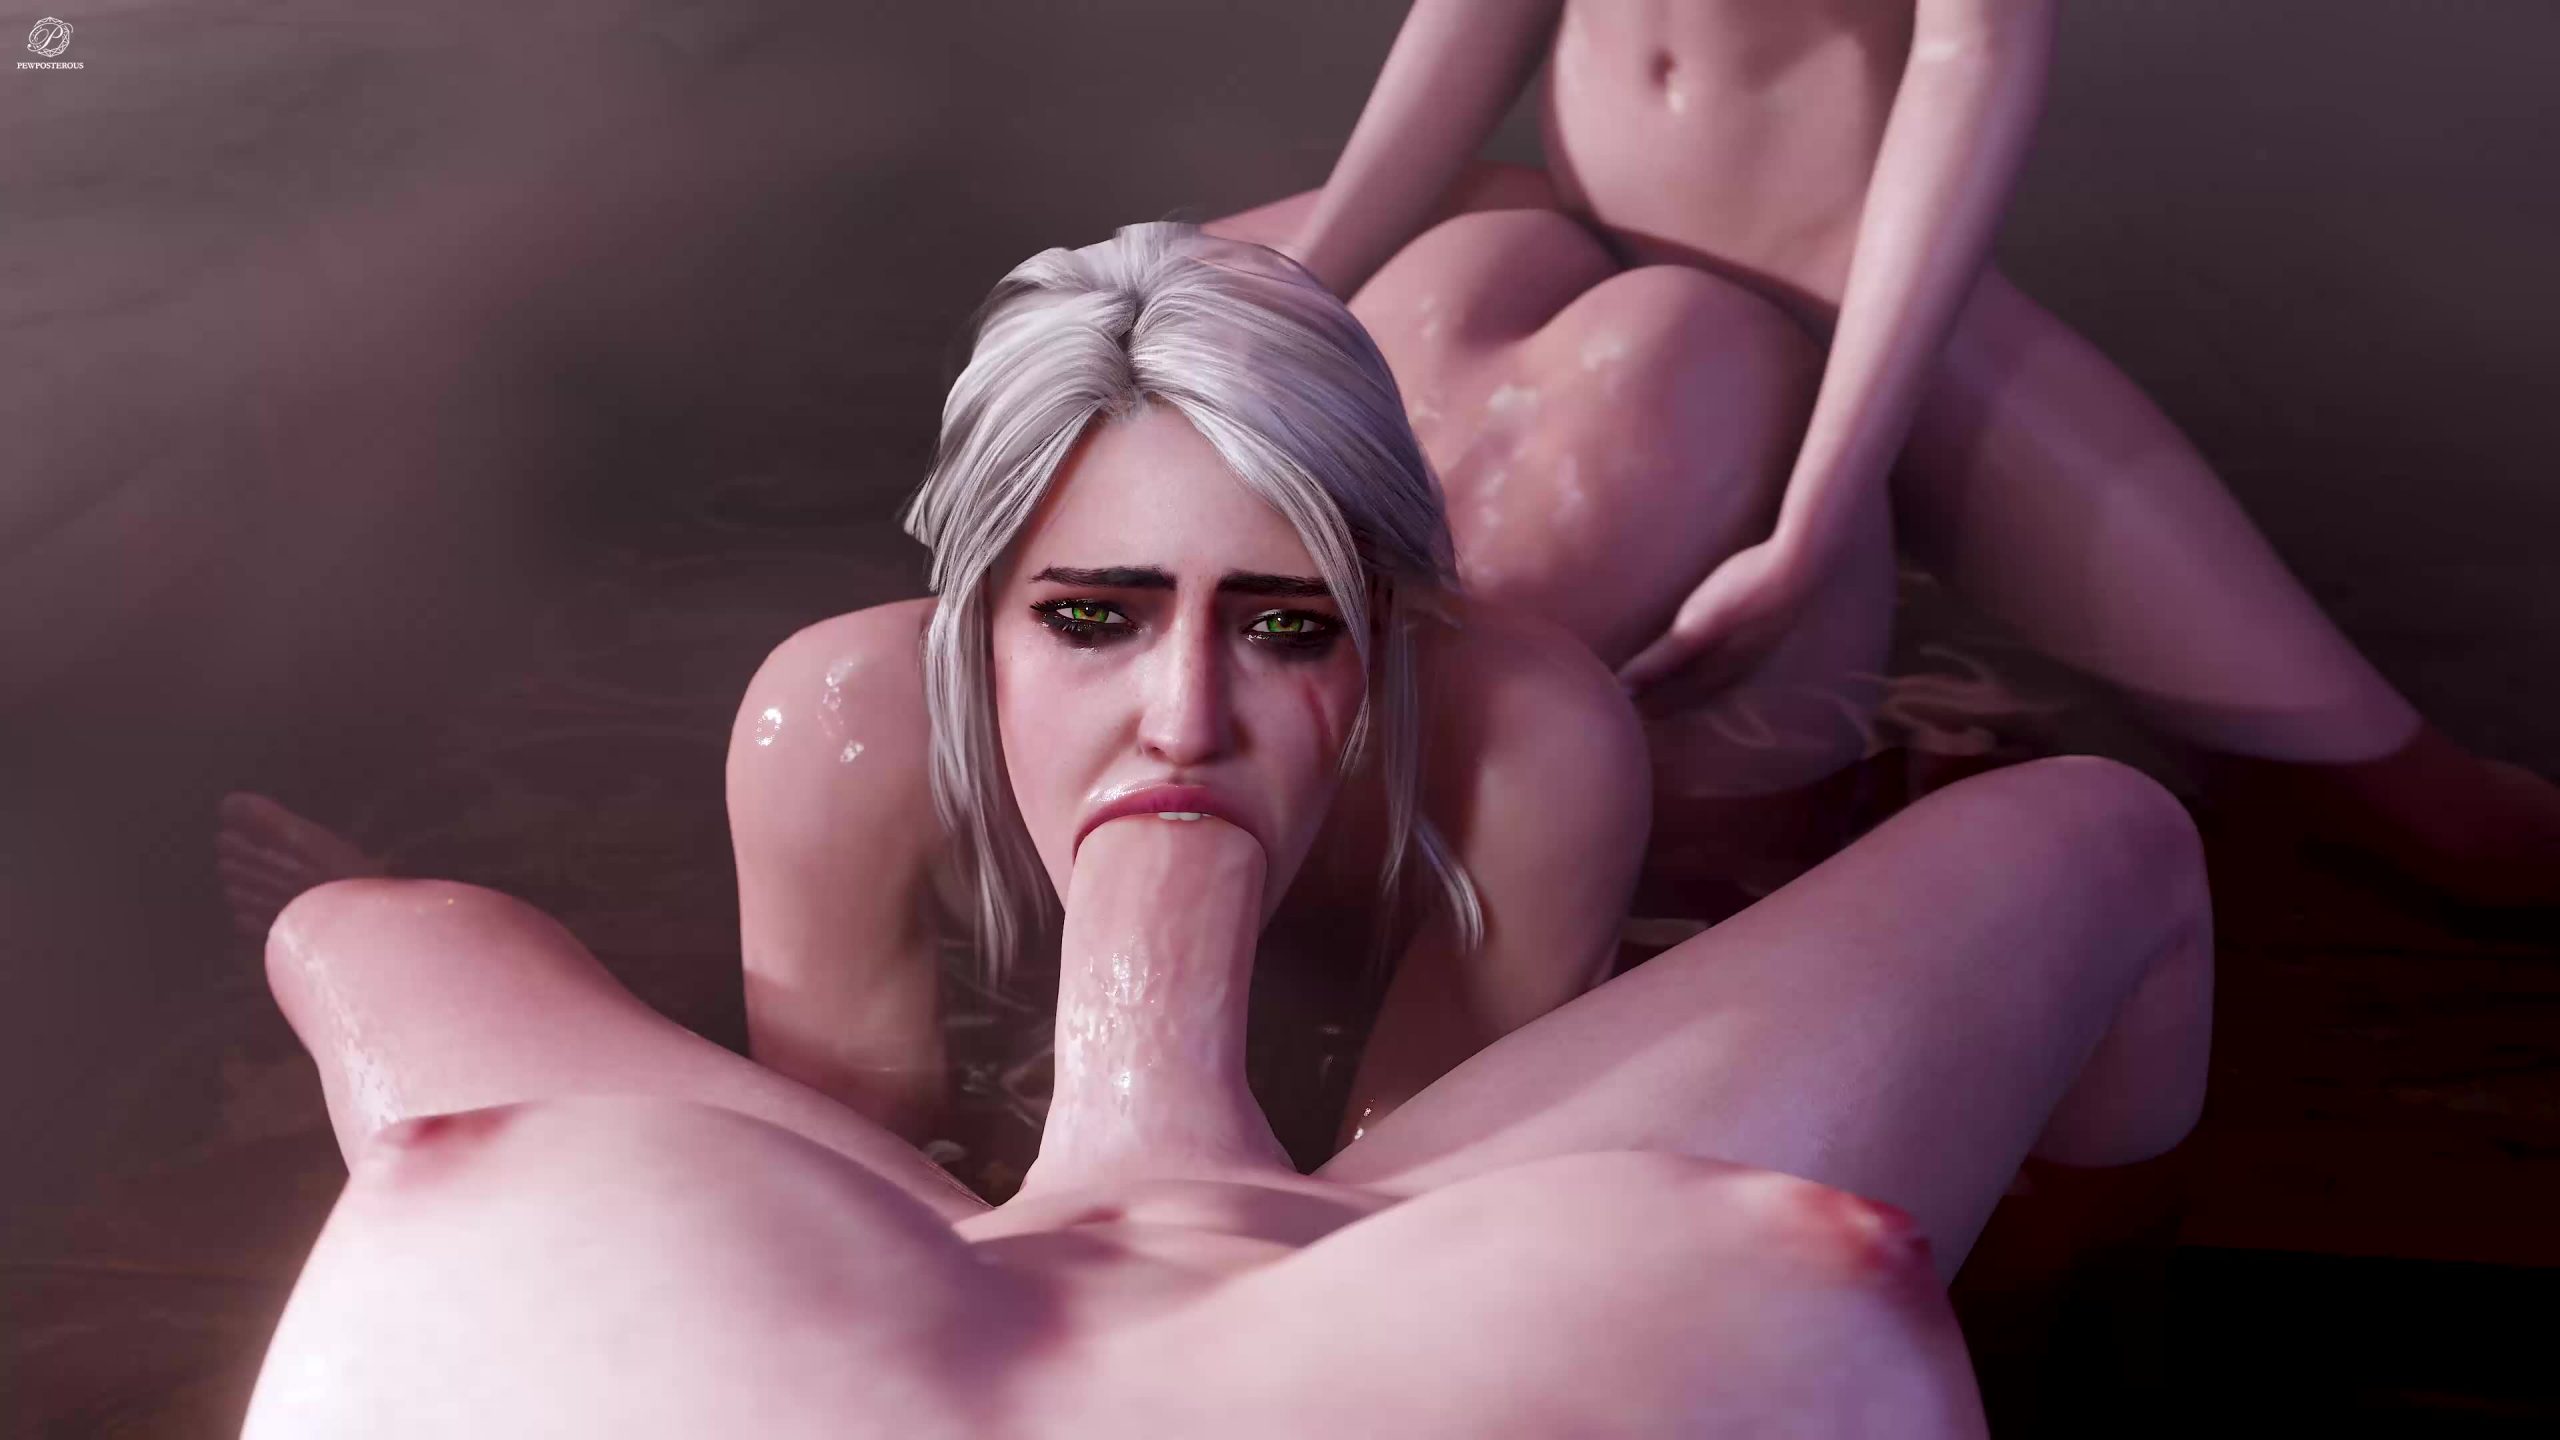 Ciri, Triss Merigold, Yennefer Having Threesome Sex With Futanari – The Witcher 3 NSFW animation thumbnail